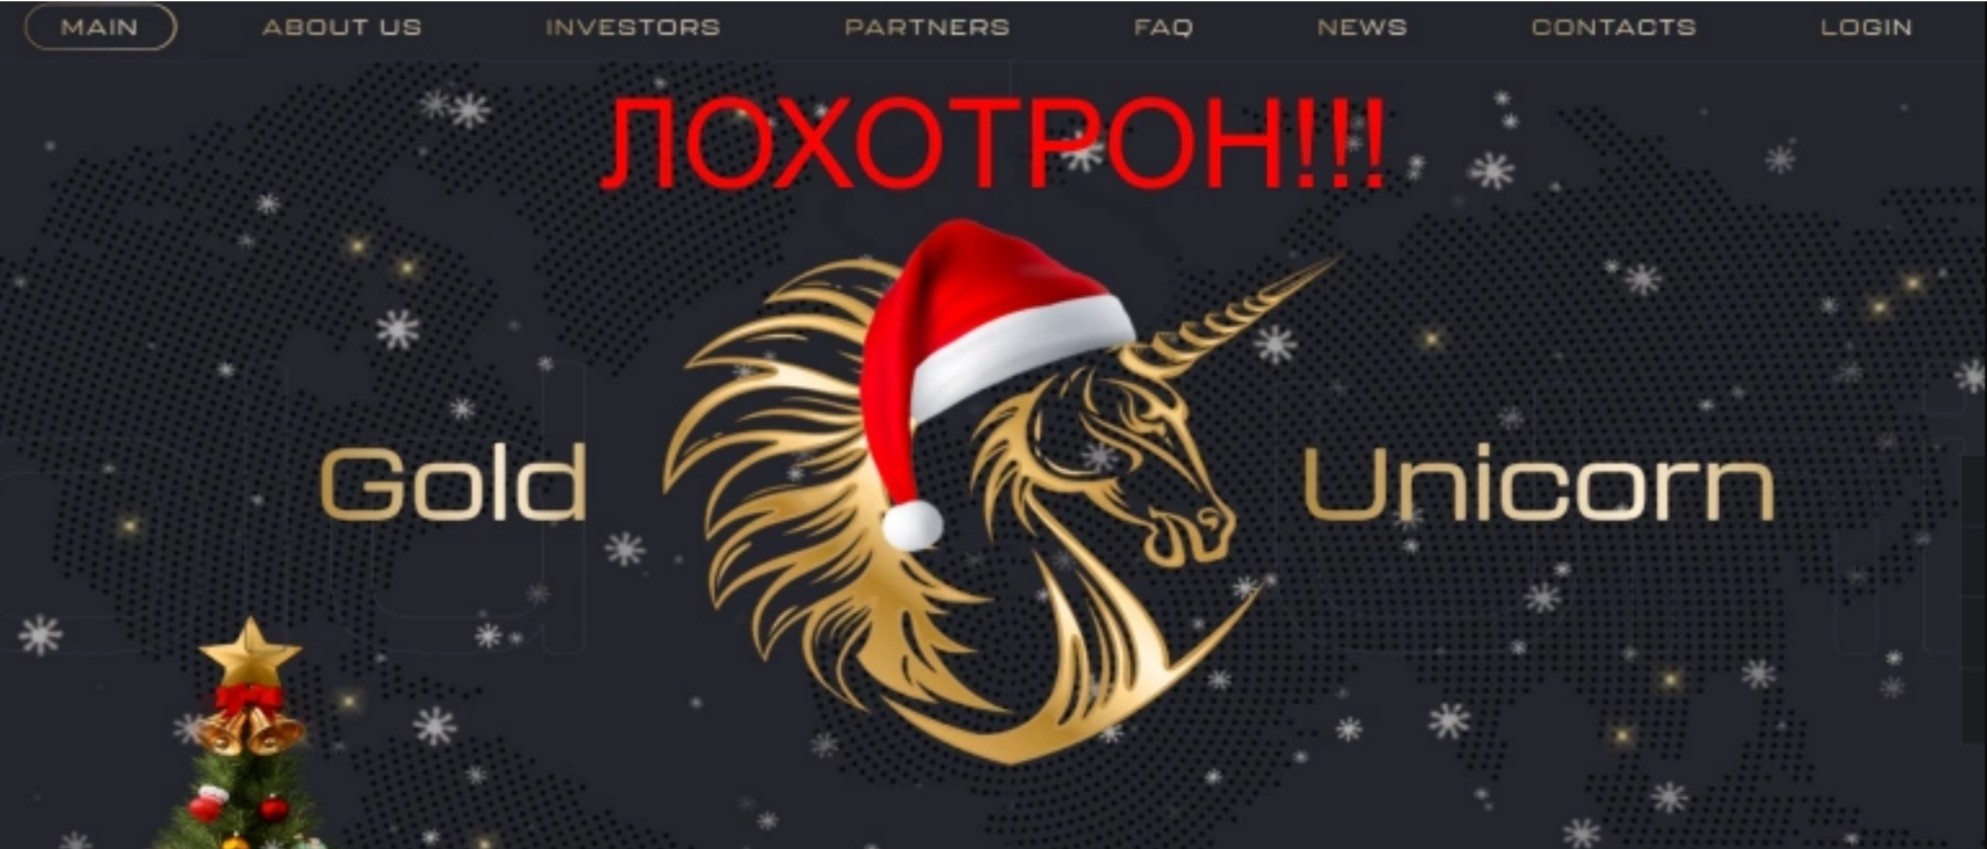 Gold Unicorn инвестиционная компания